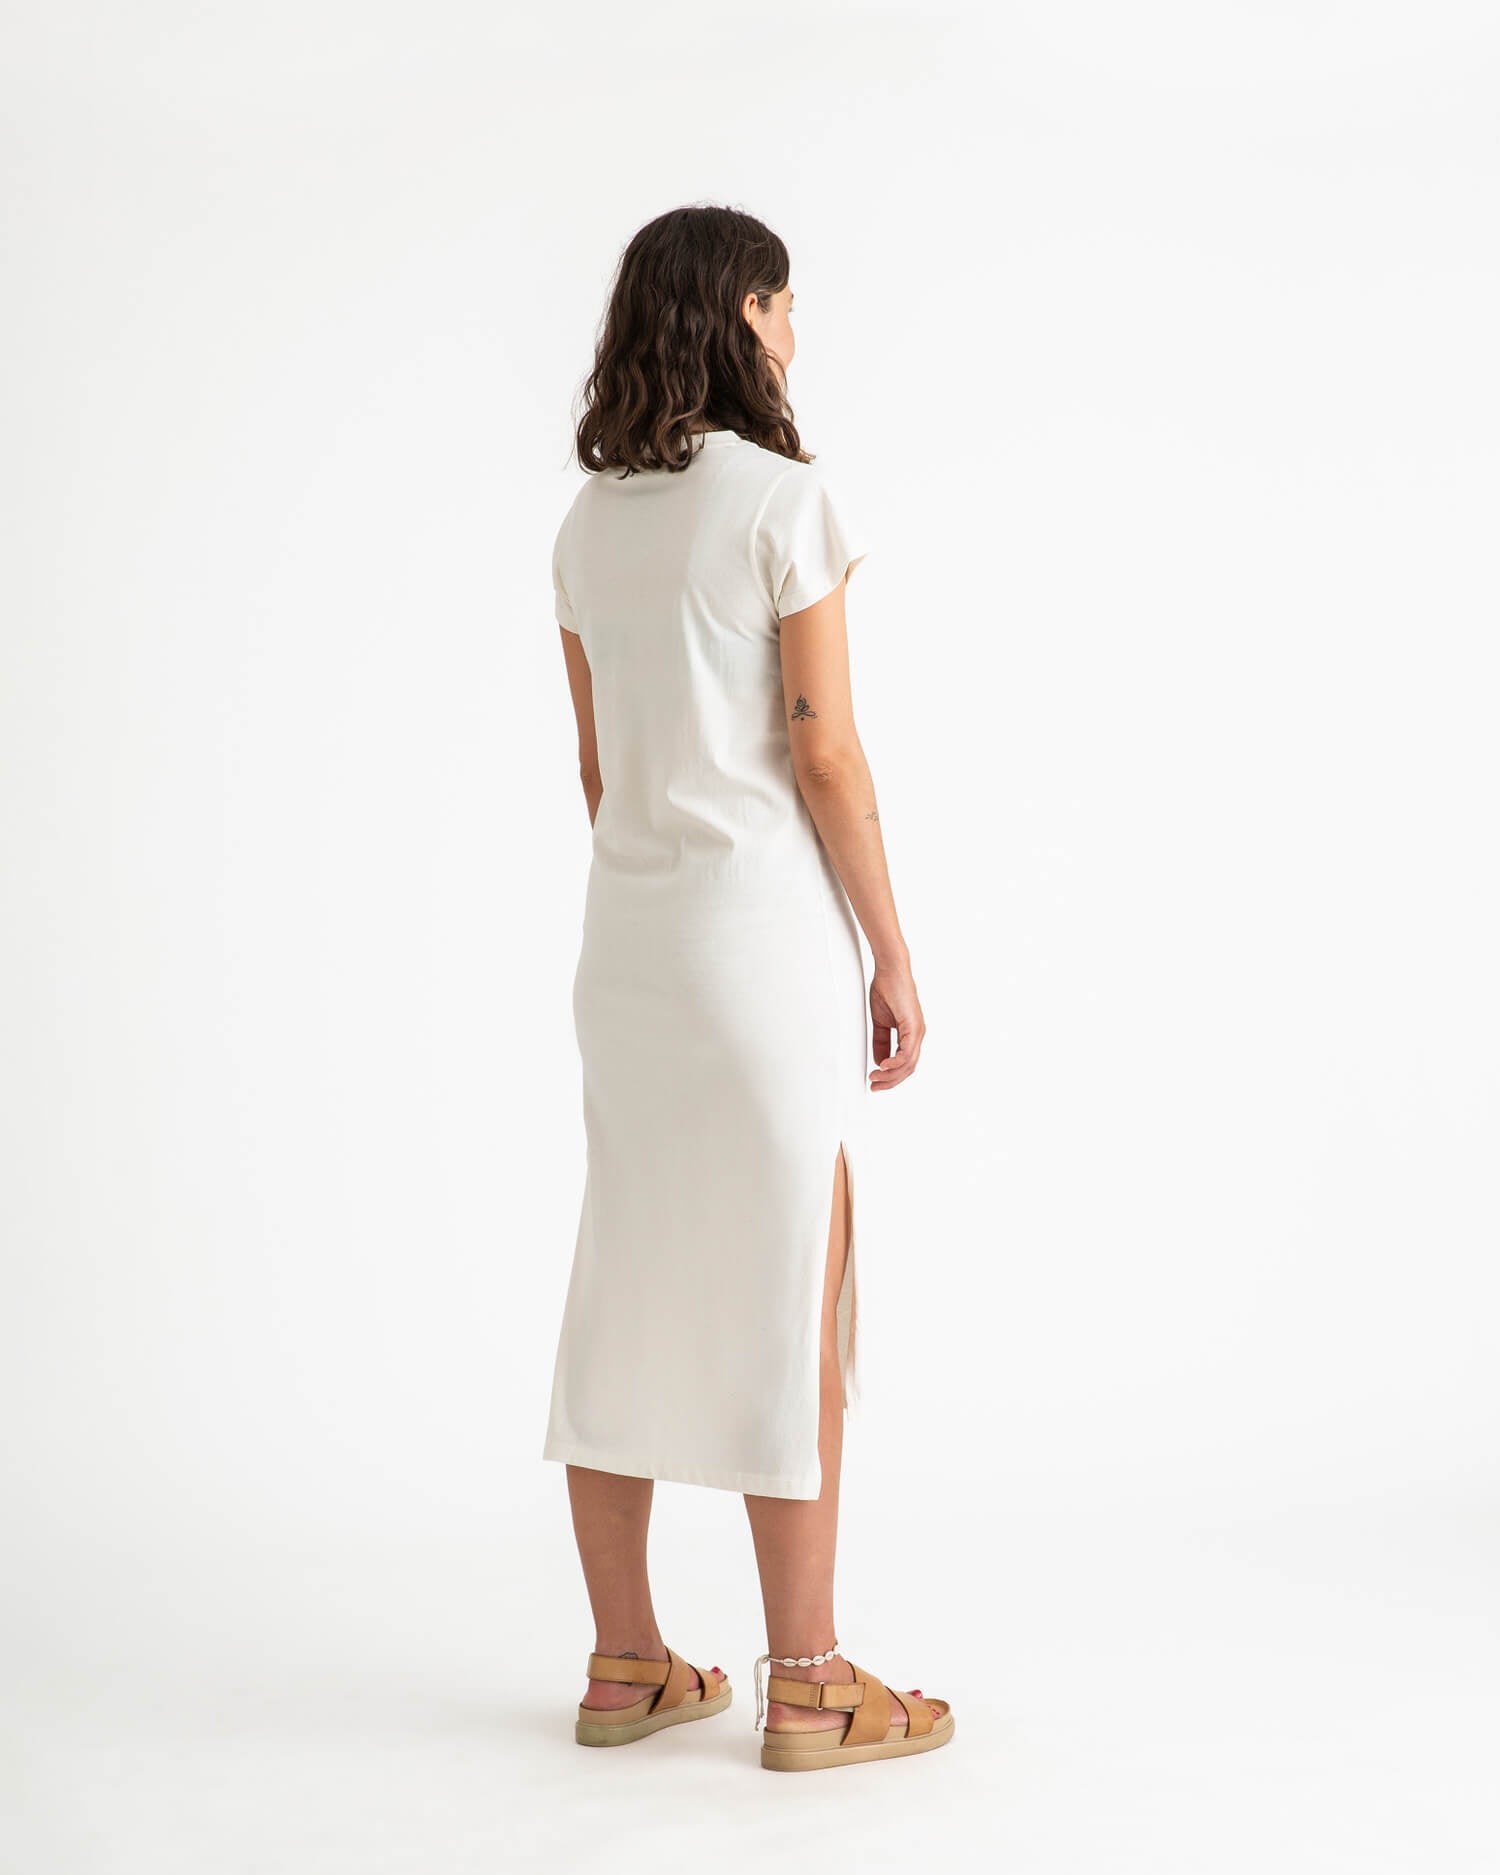 White, short-sleeved dress made of organic cotton from Matona